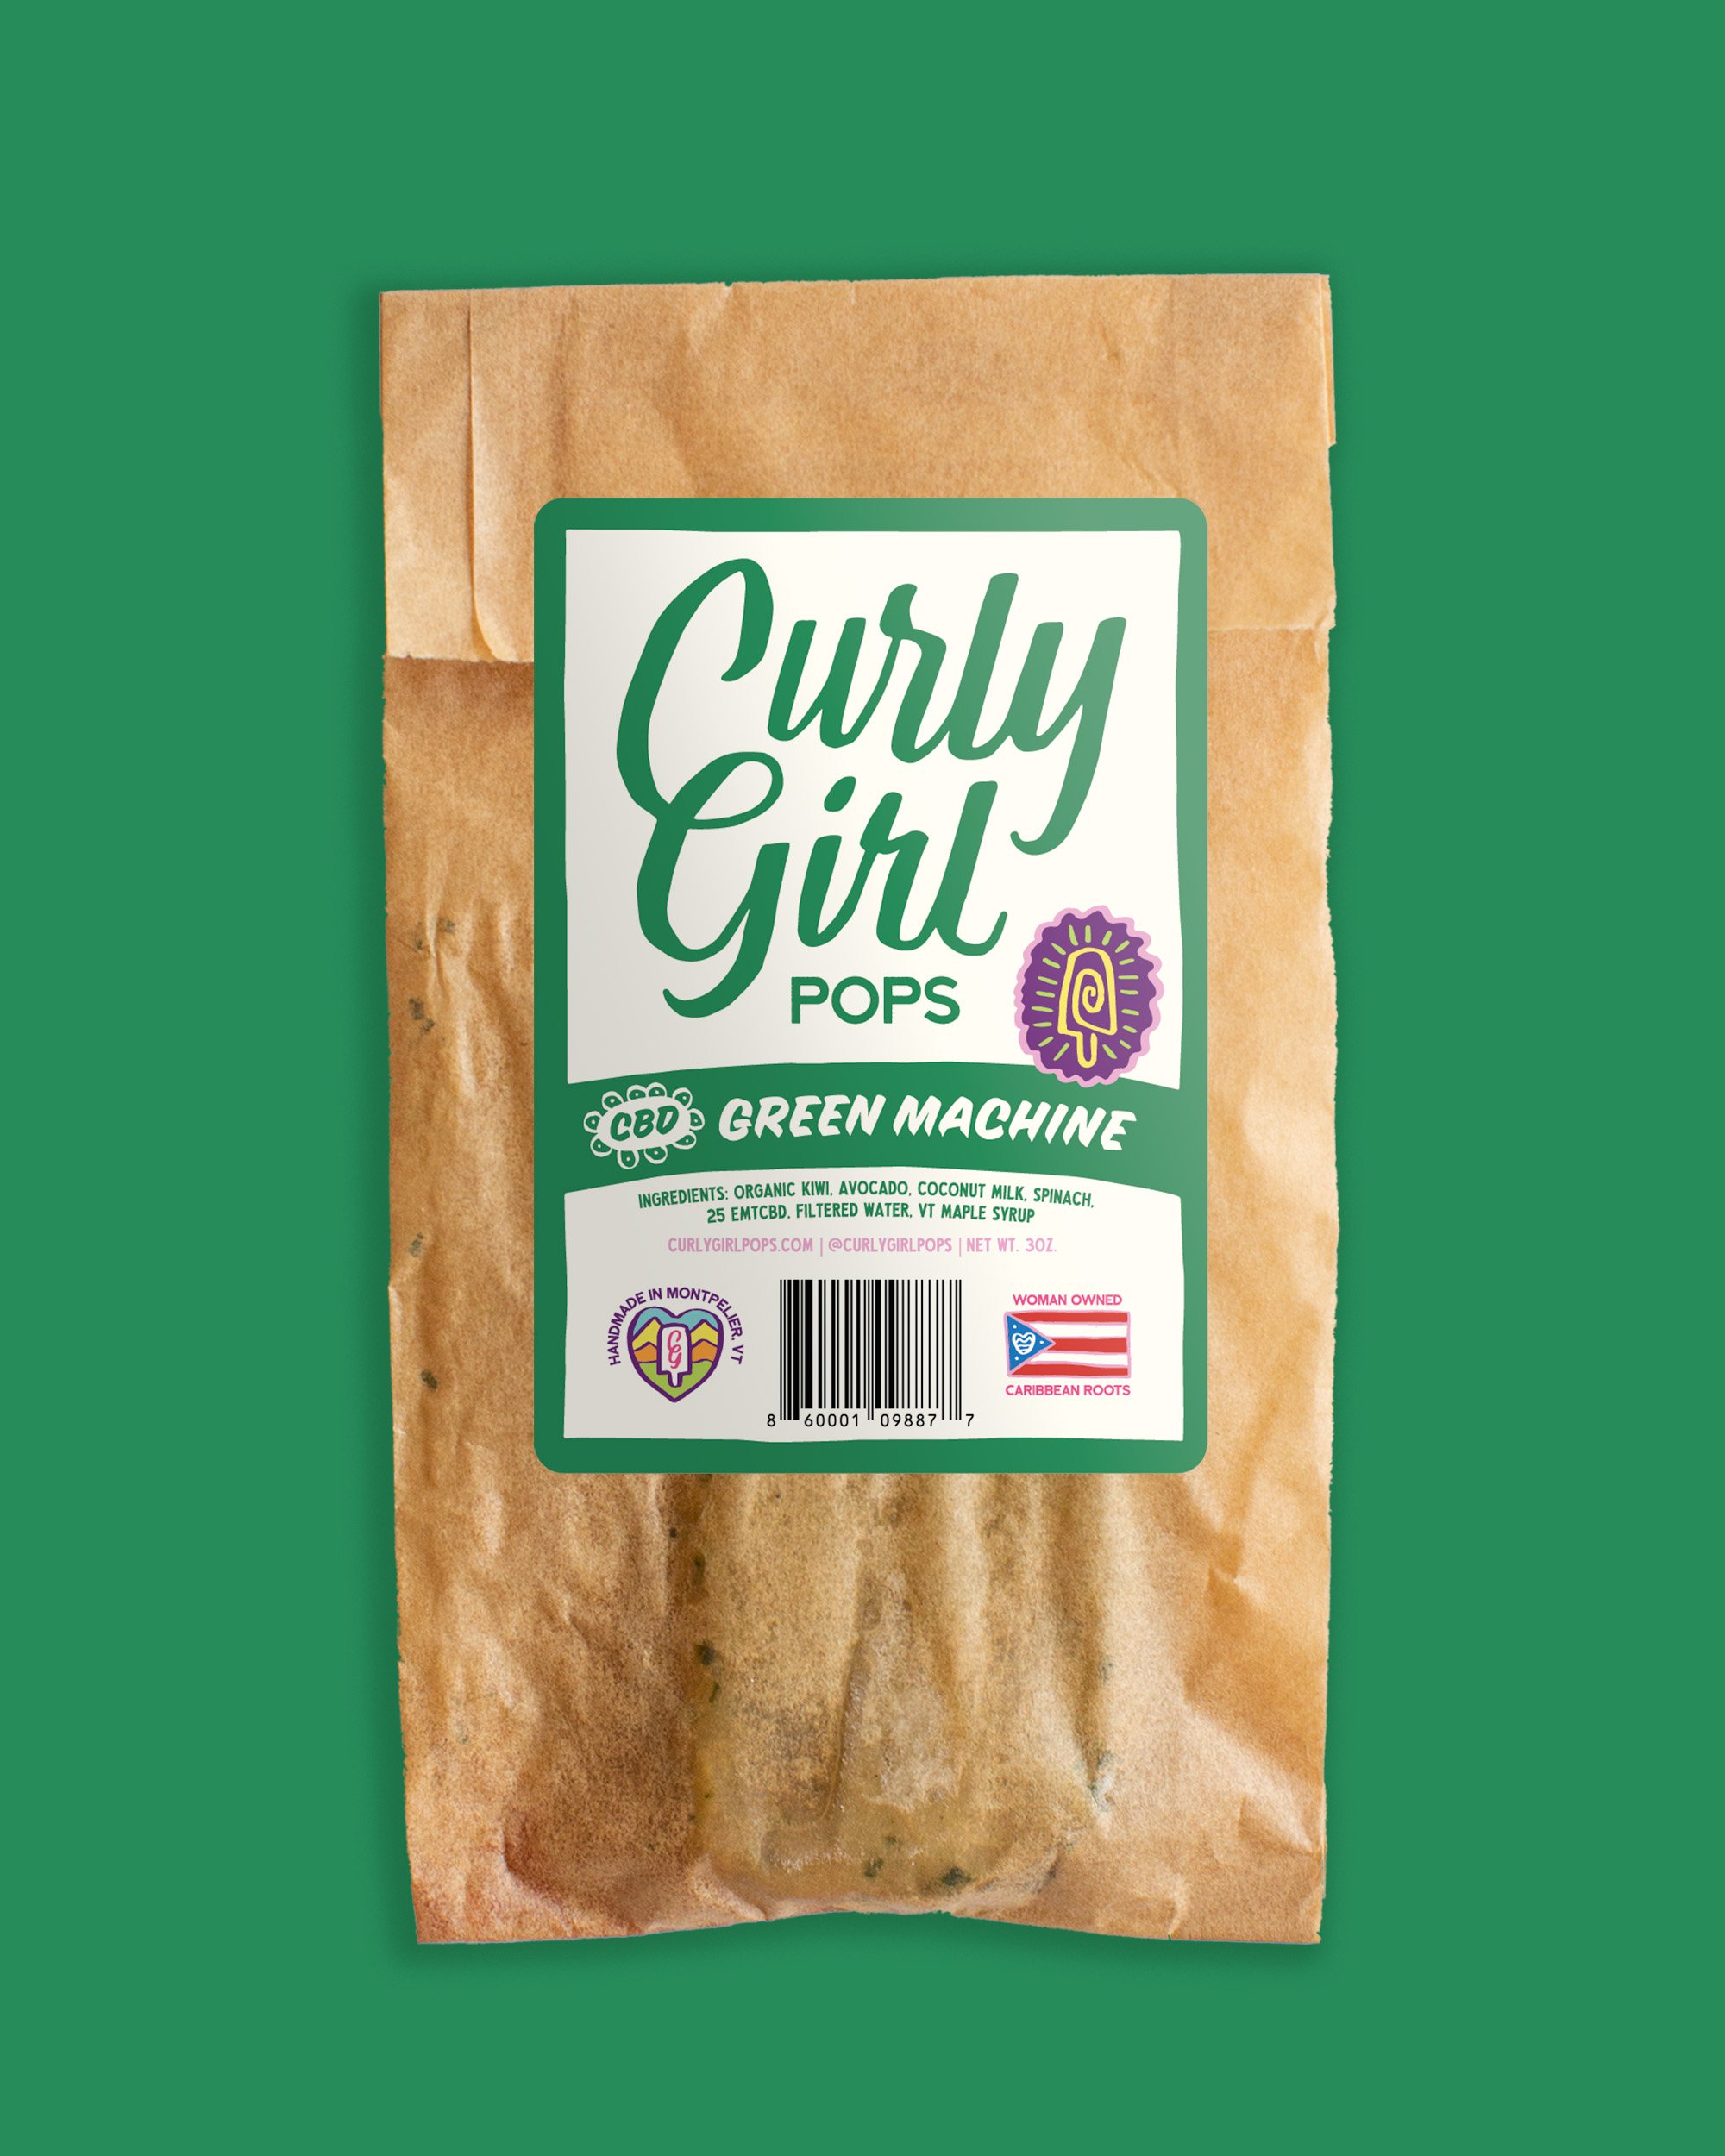 CurlyGirl-Packaging-Mockups-GreenMachine_CBD.jpg